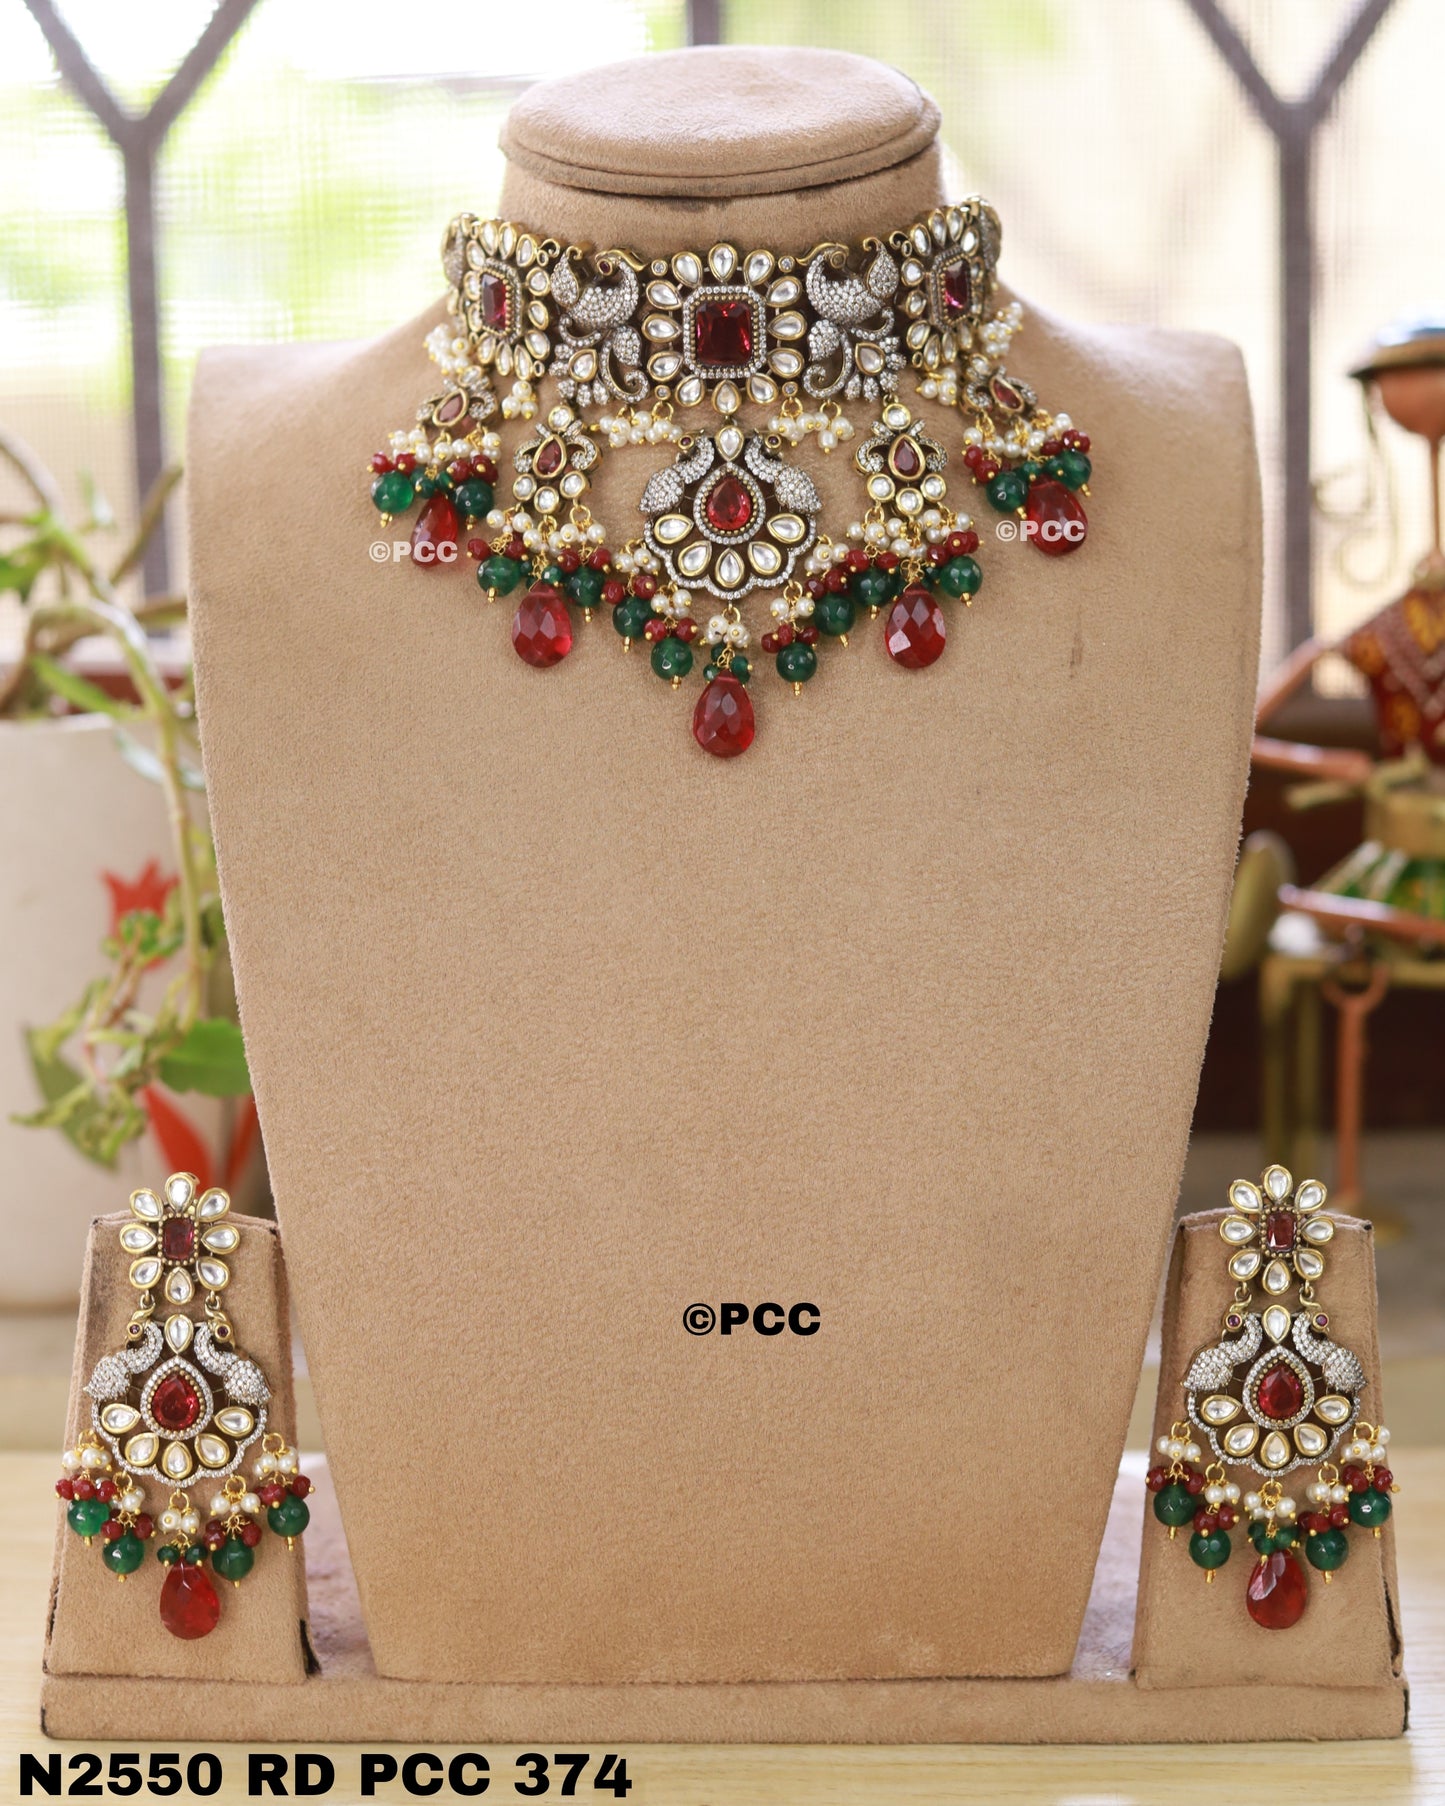 Exquisite Handmade Choker Necklace & Earrings